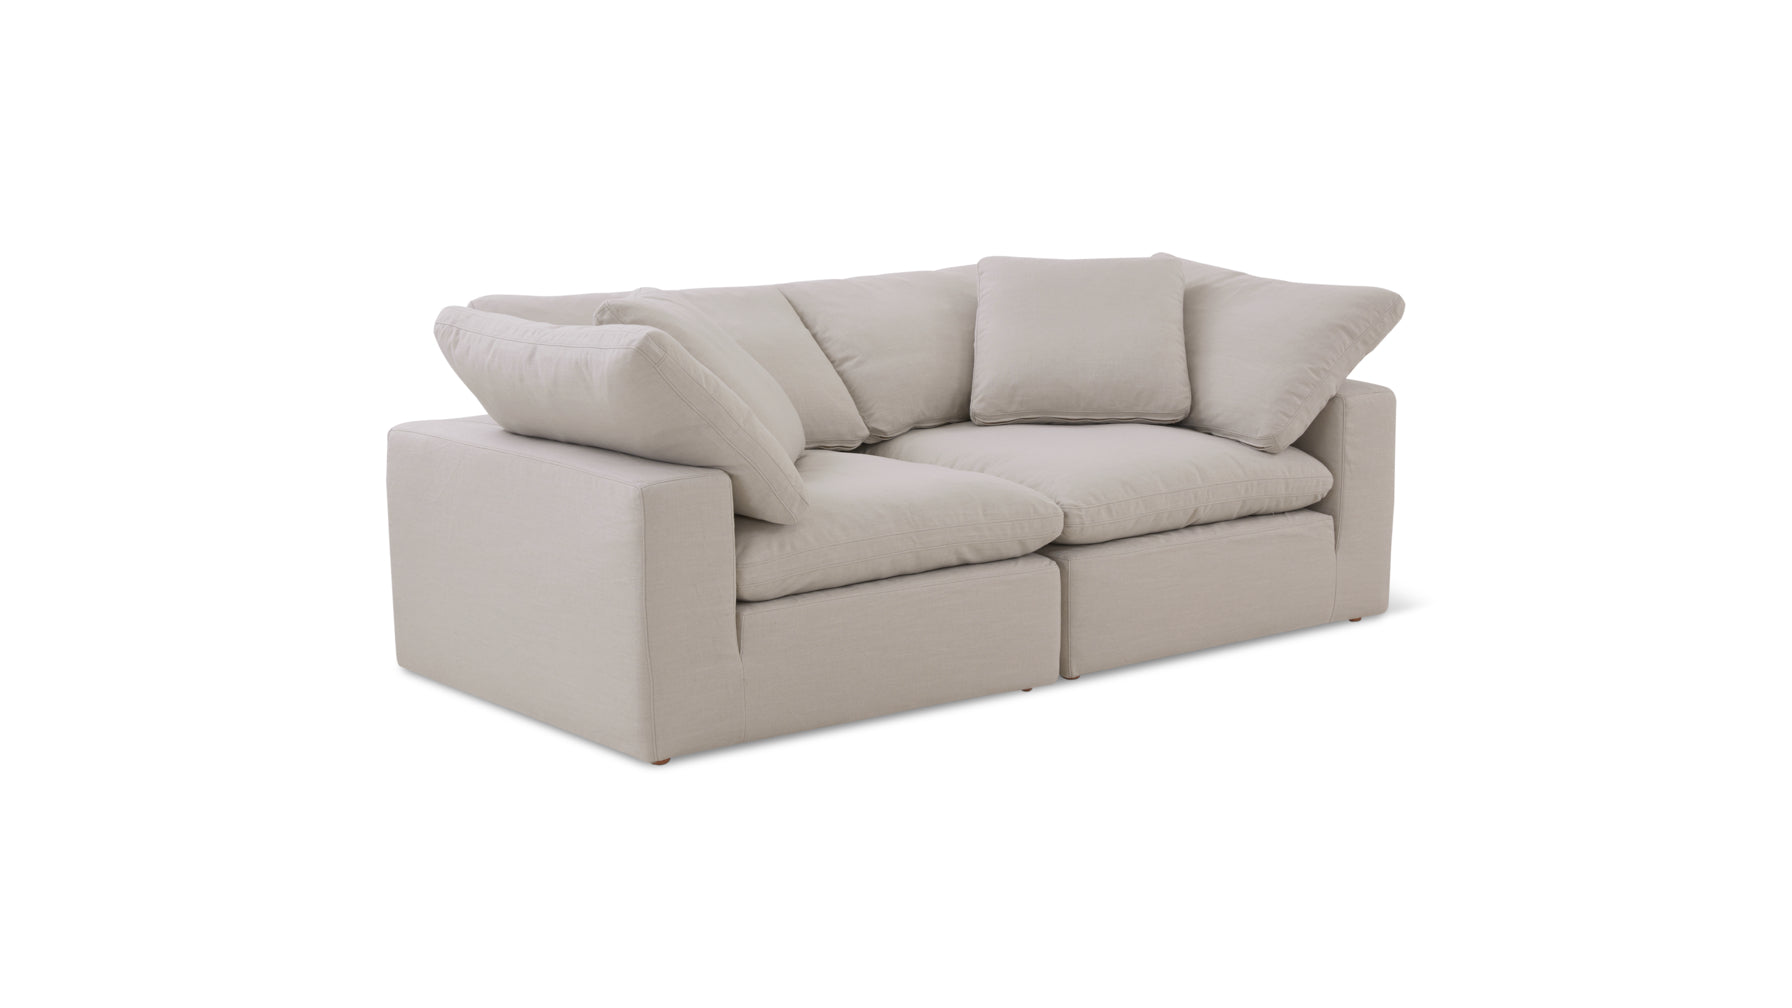 Movie Night™ 2-Piece Modular Sofa, Standard, Clay - Image 4